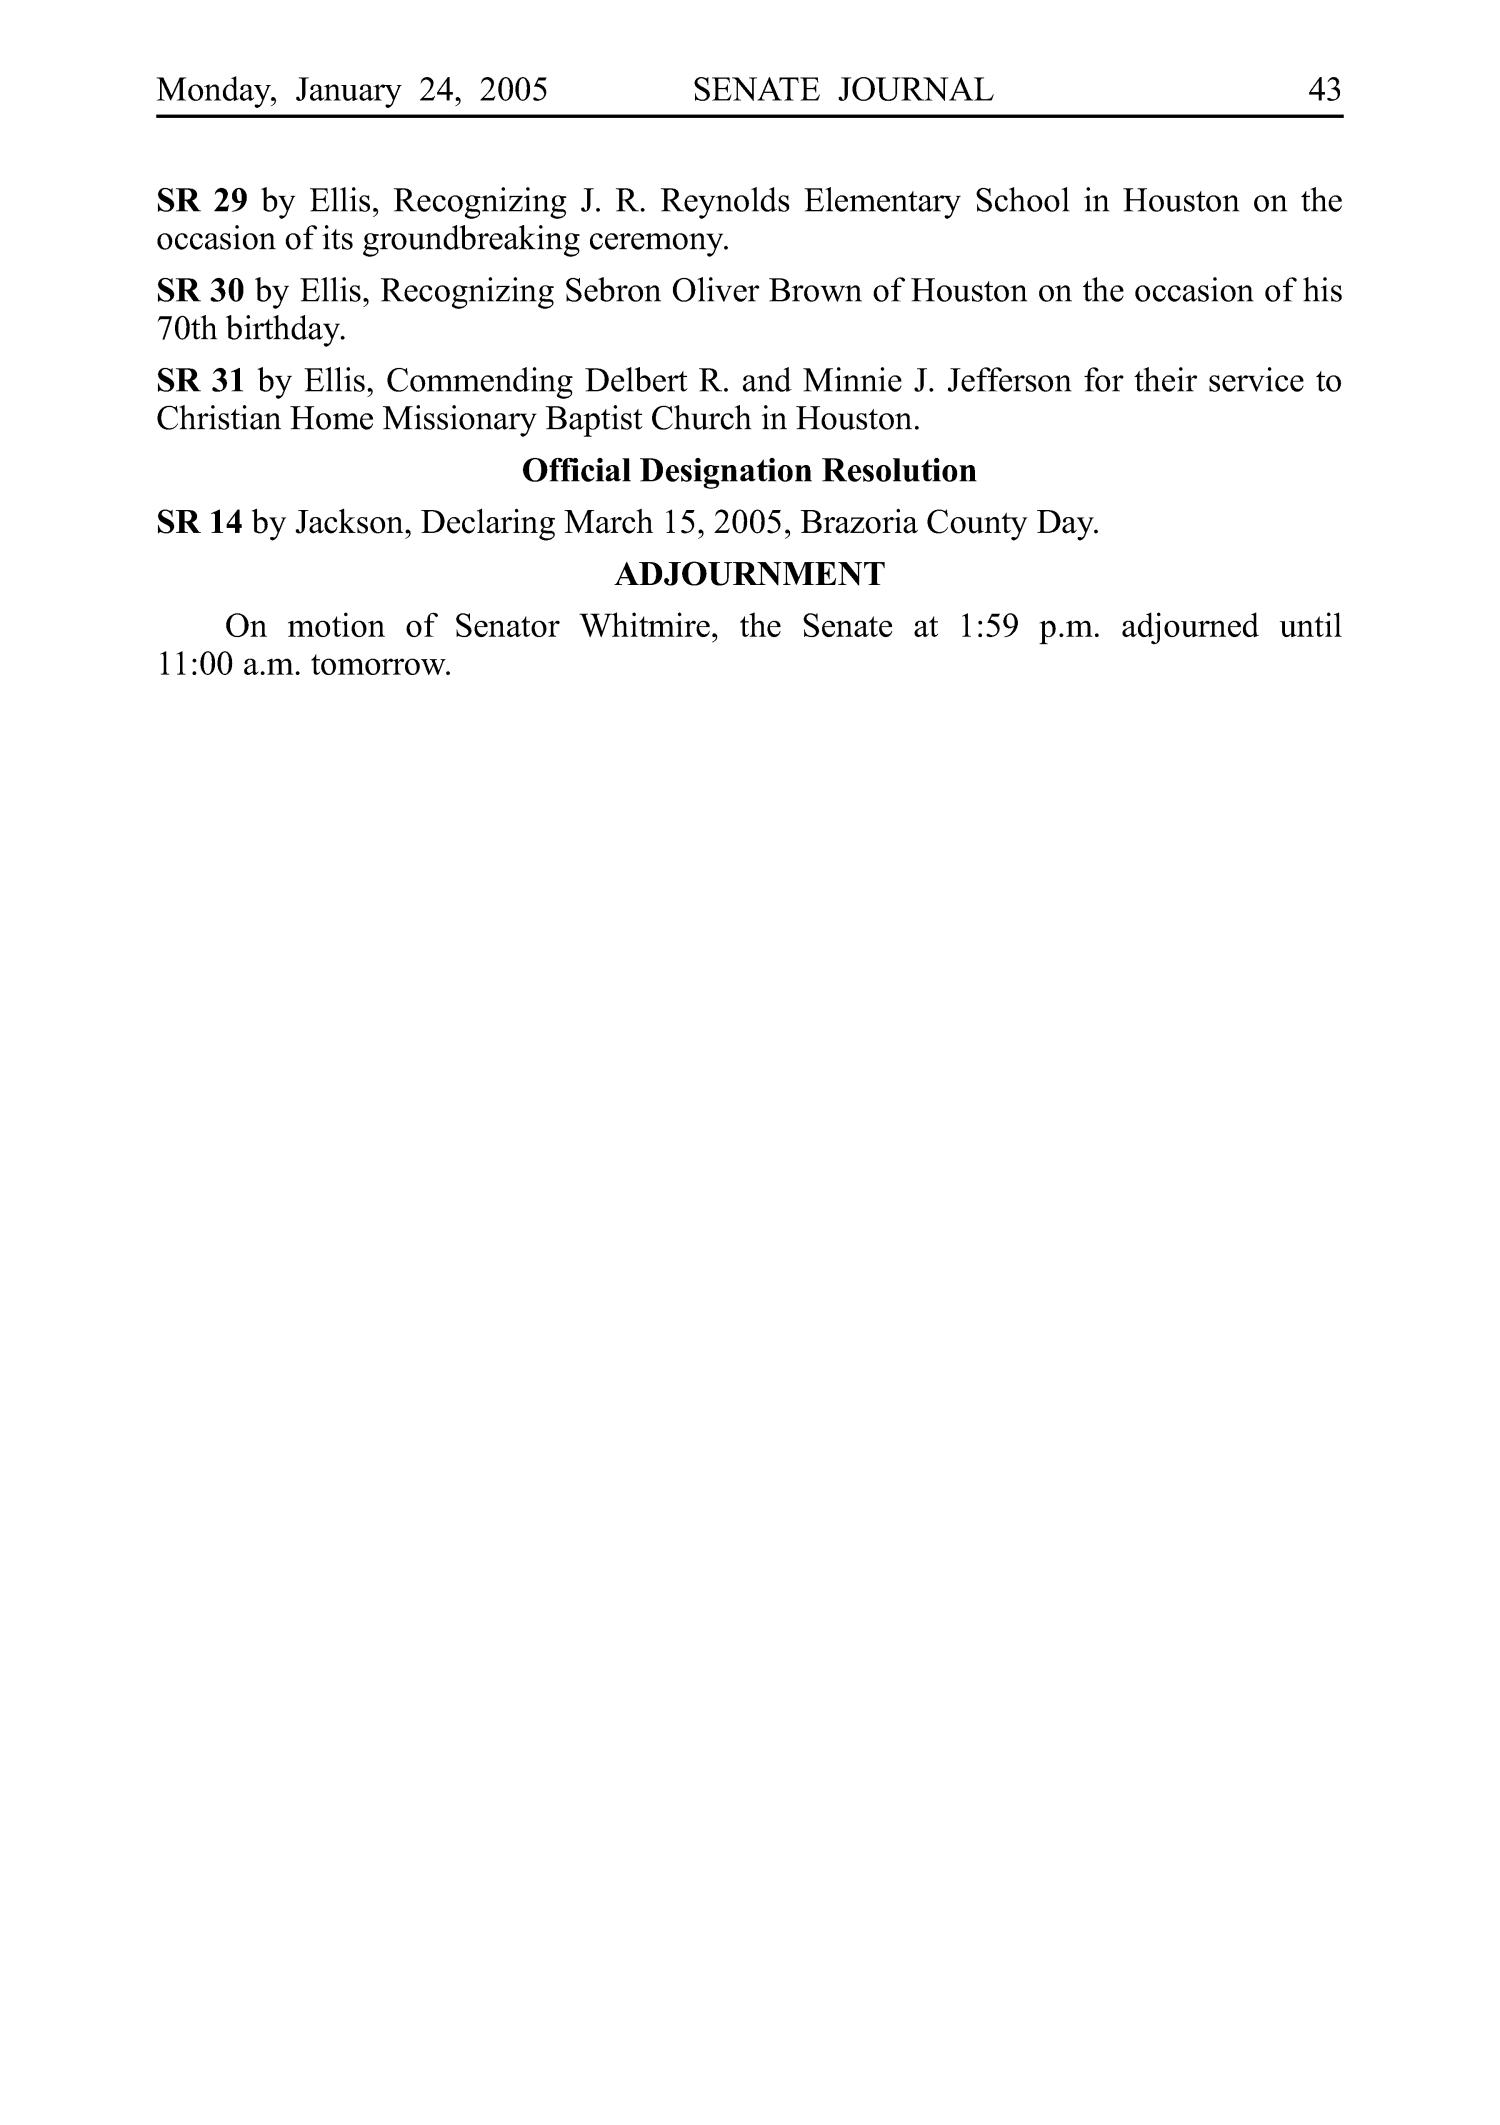 Journal of the Senate, Regular Session of the Seventy-Ninth Legislature of the State of Texas, Volume 1
                                                
                                                    43
                                                